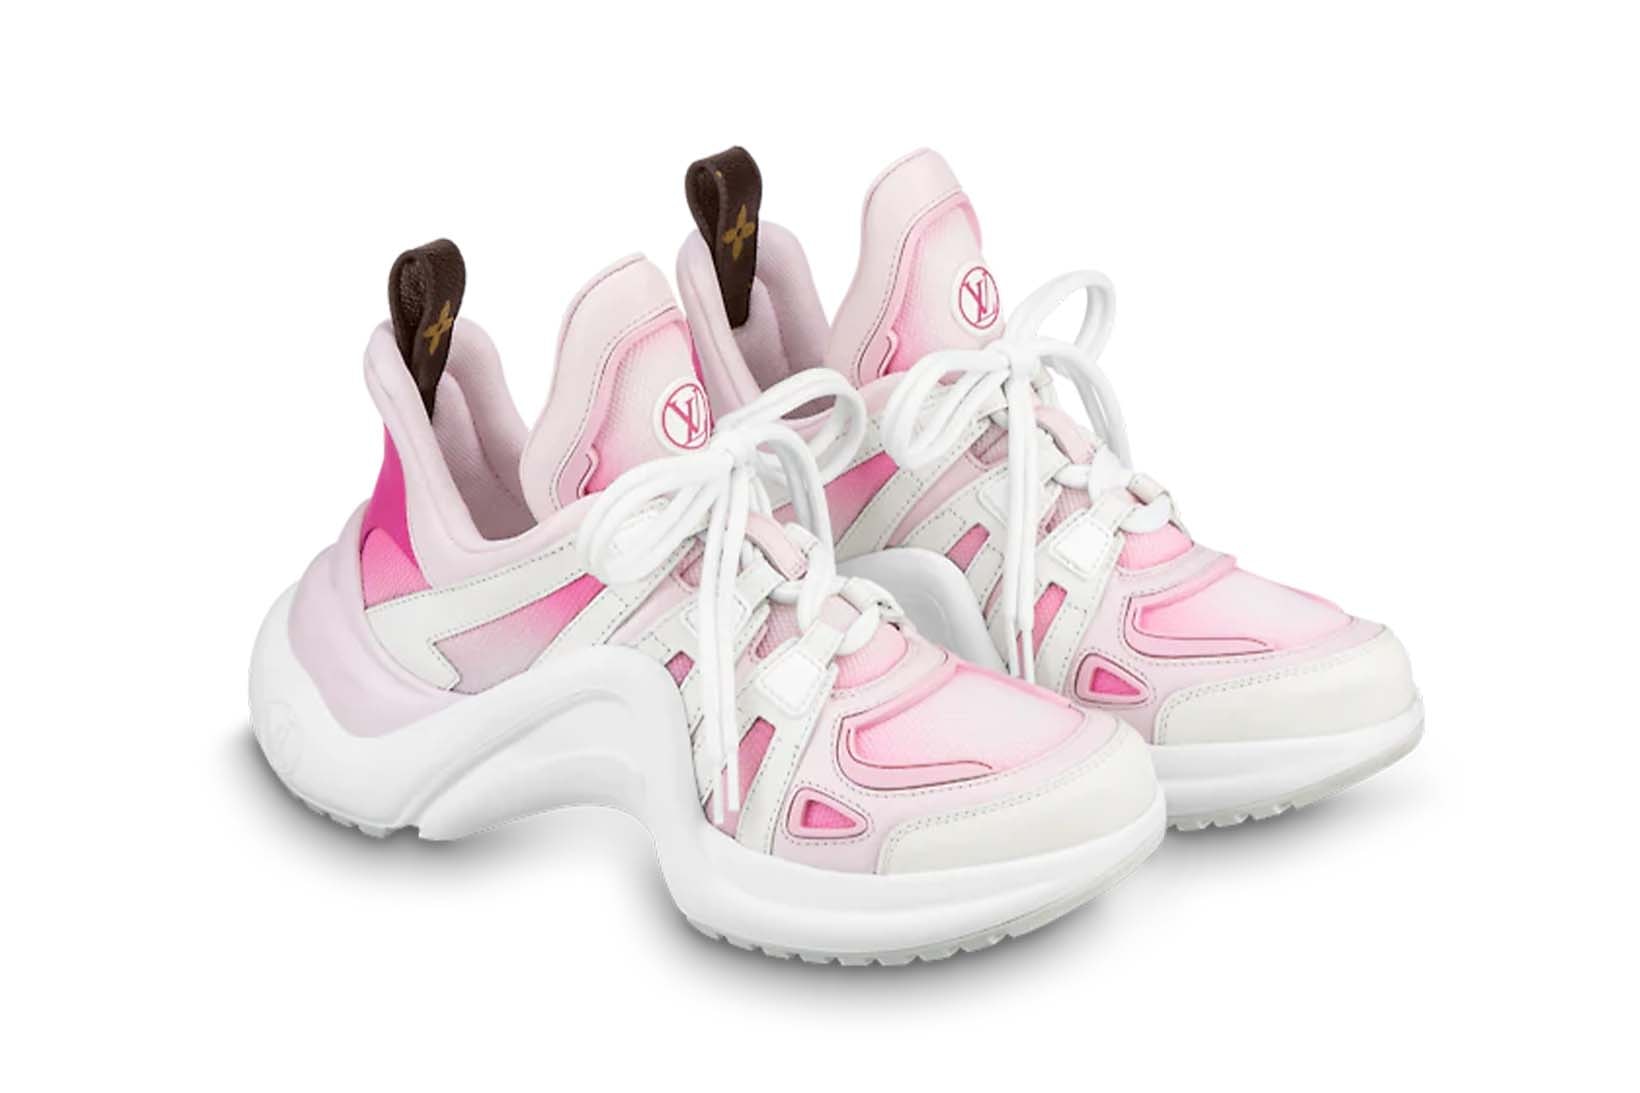 Louis Vuitton Archlight Sneaker Light Pink Price